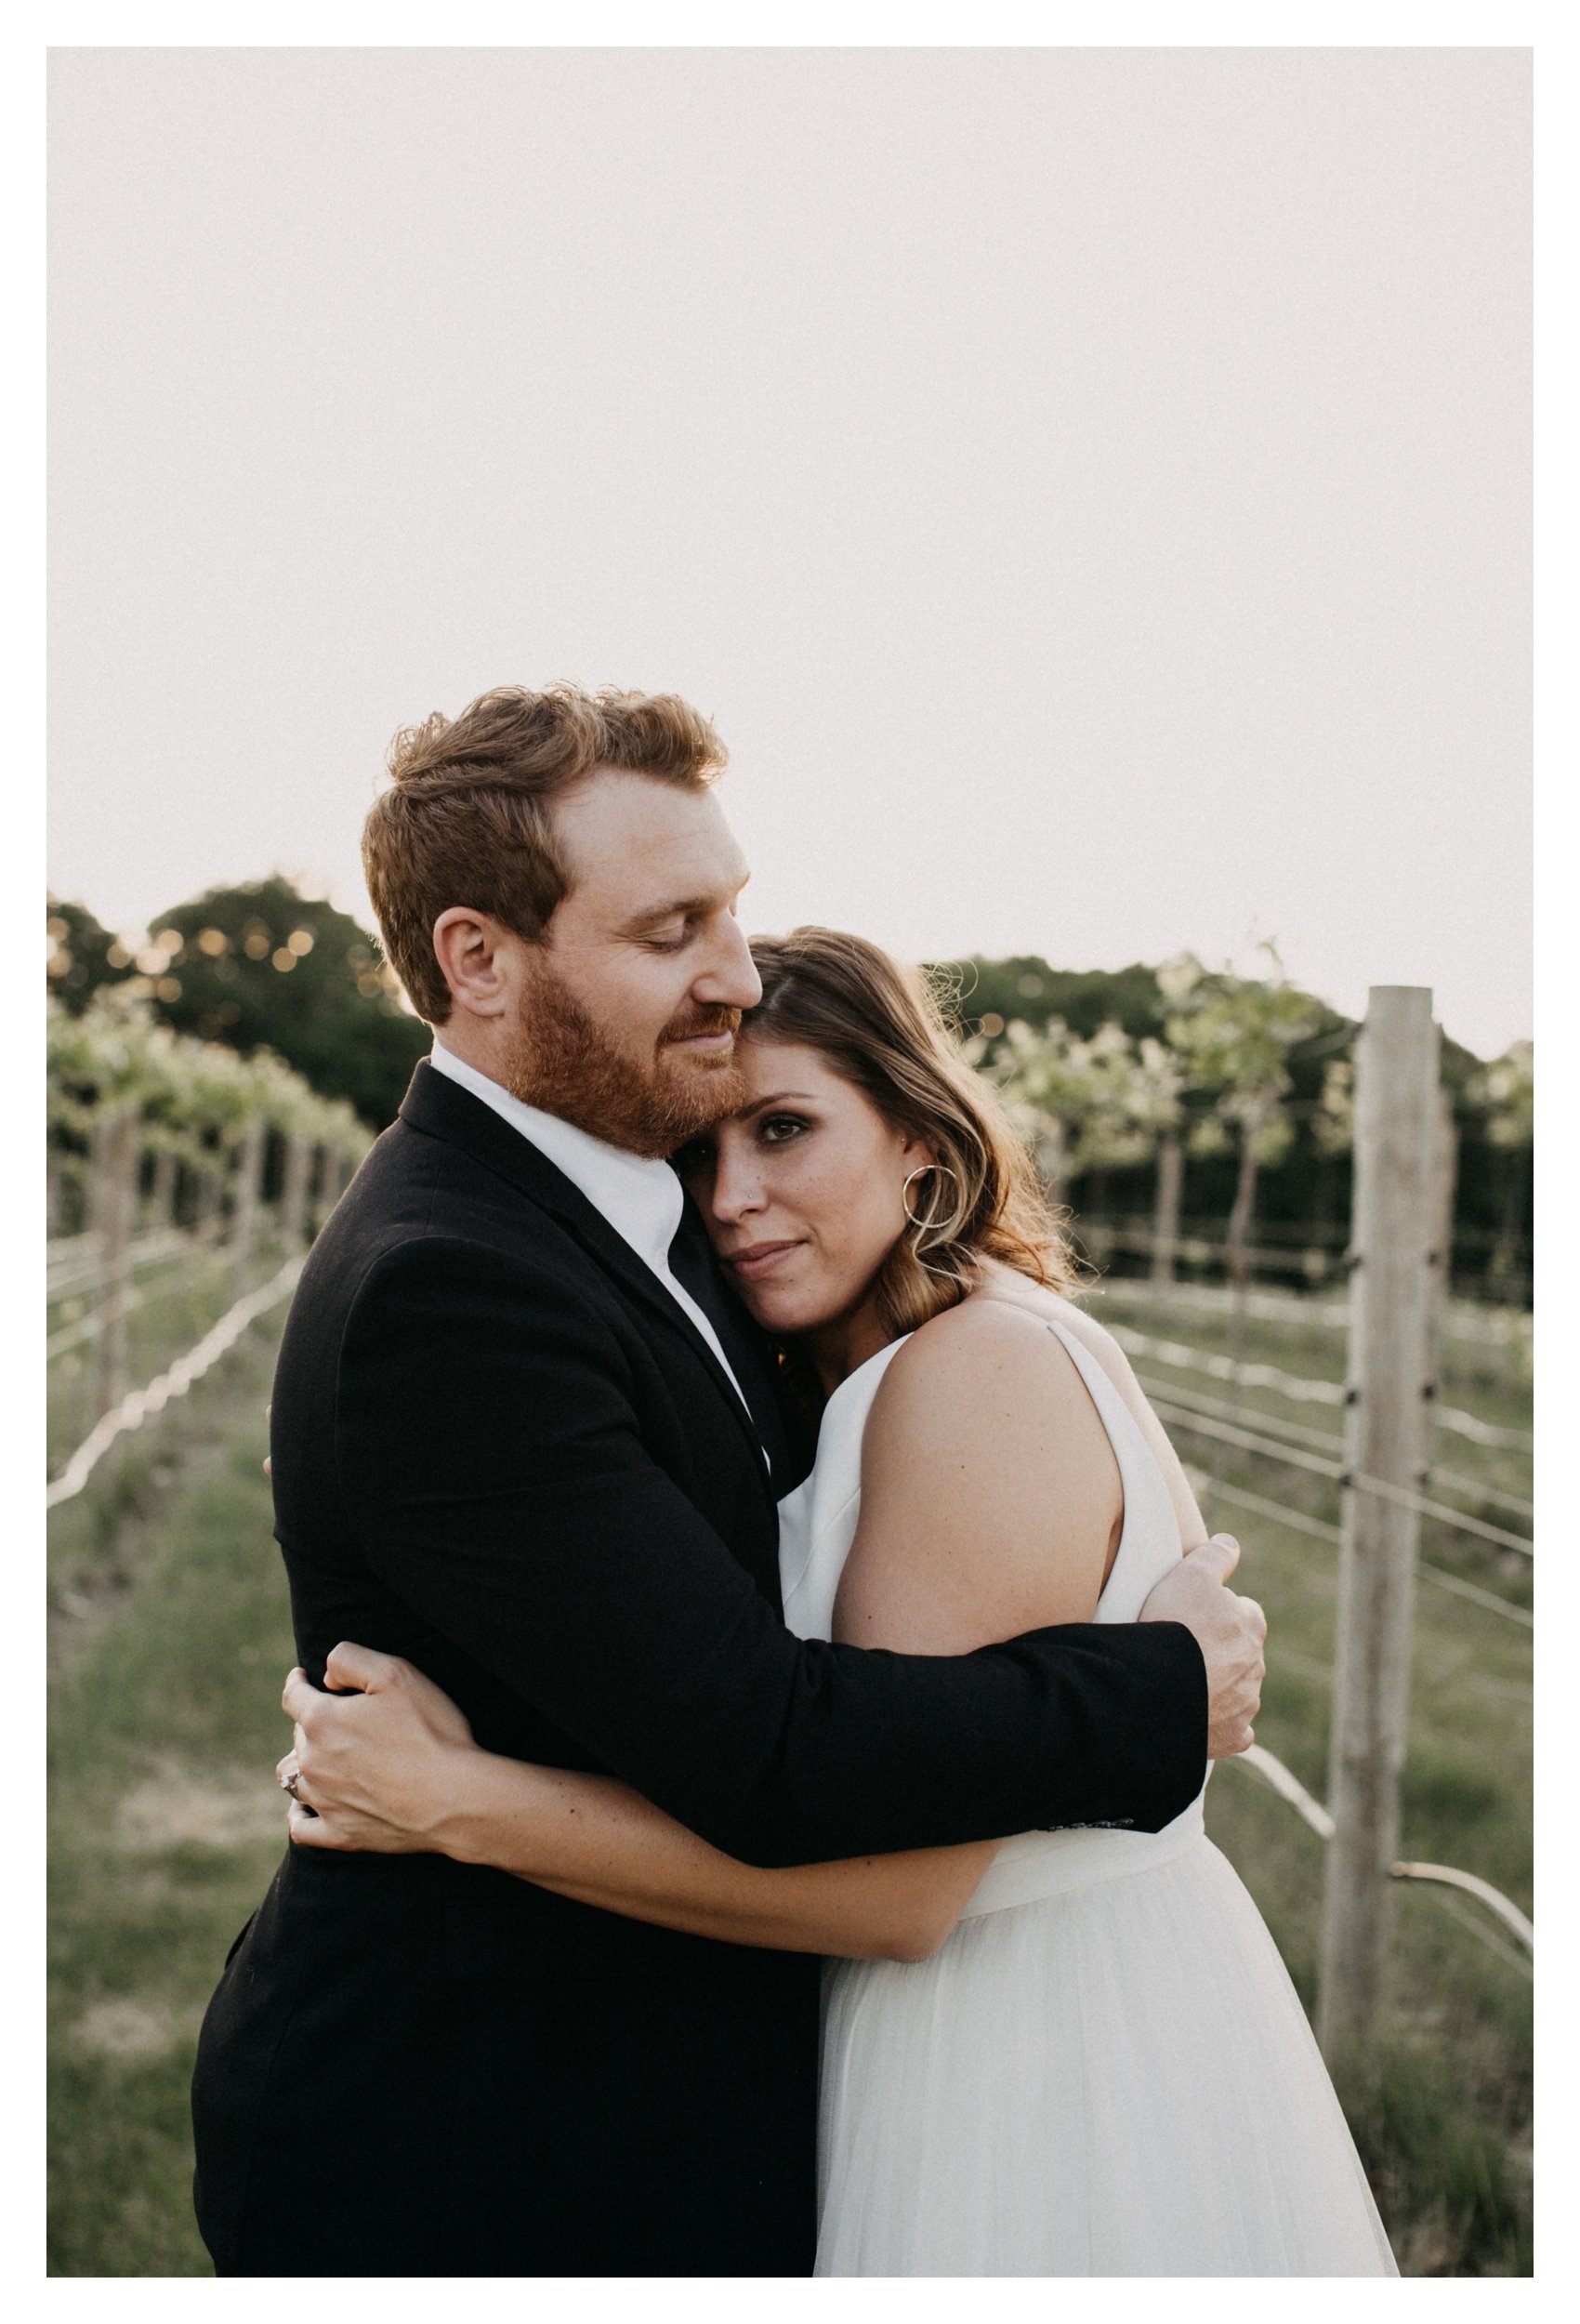 Bride and groom hugging in vineyard during sunset at Minnesota winery wedding